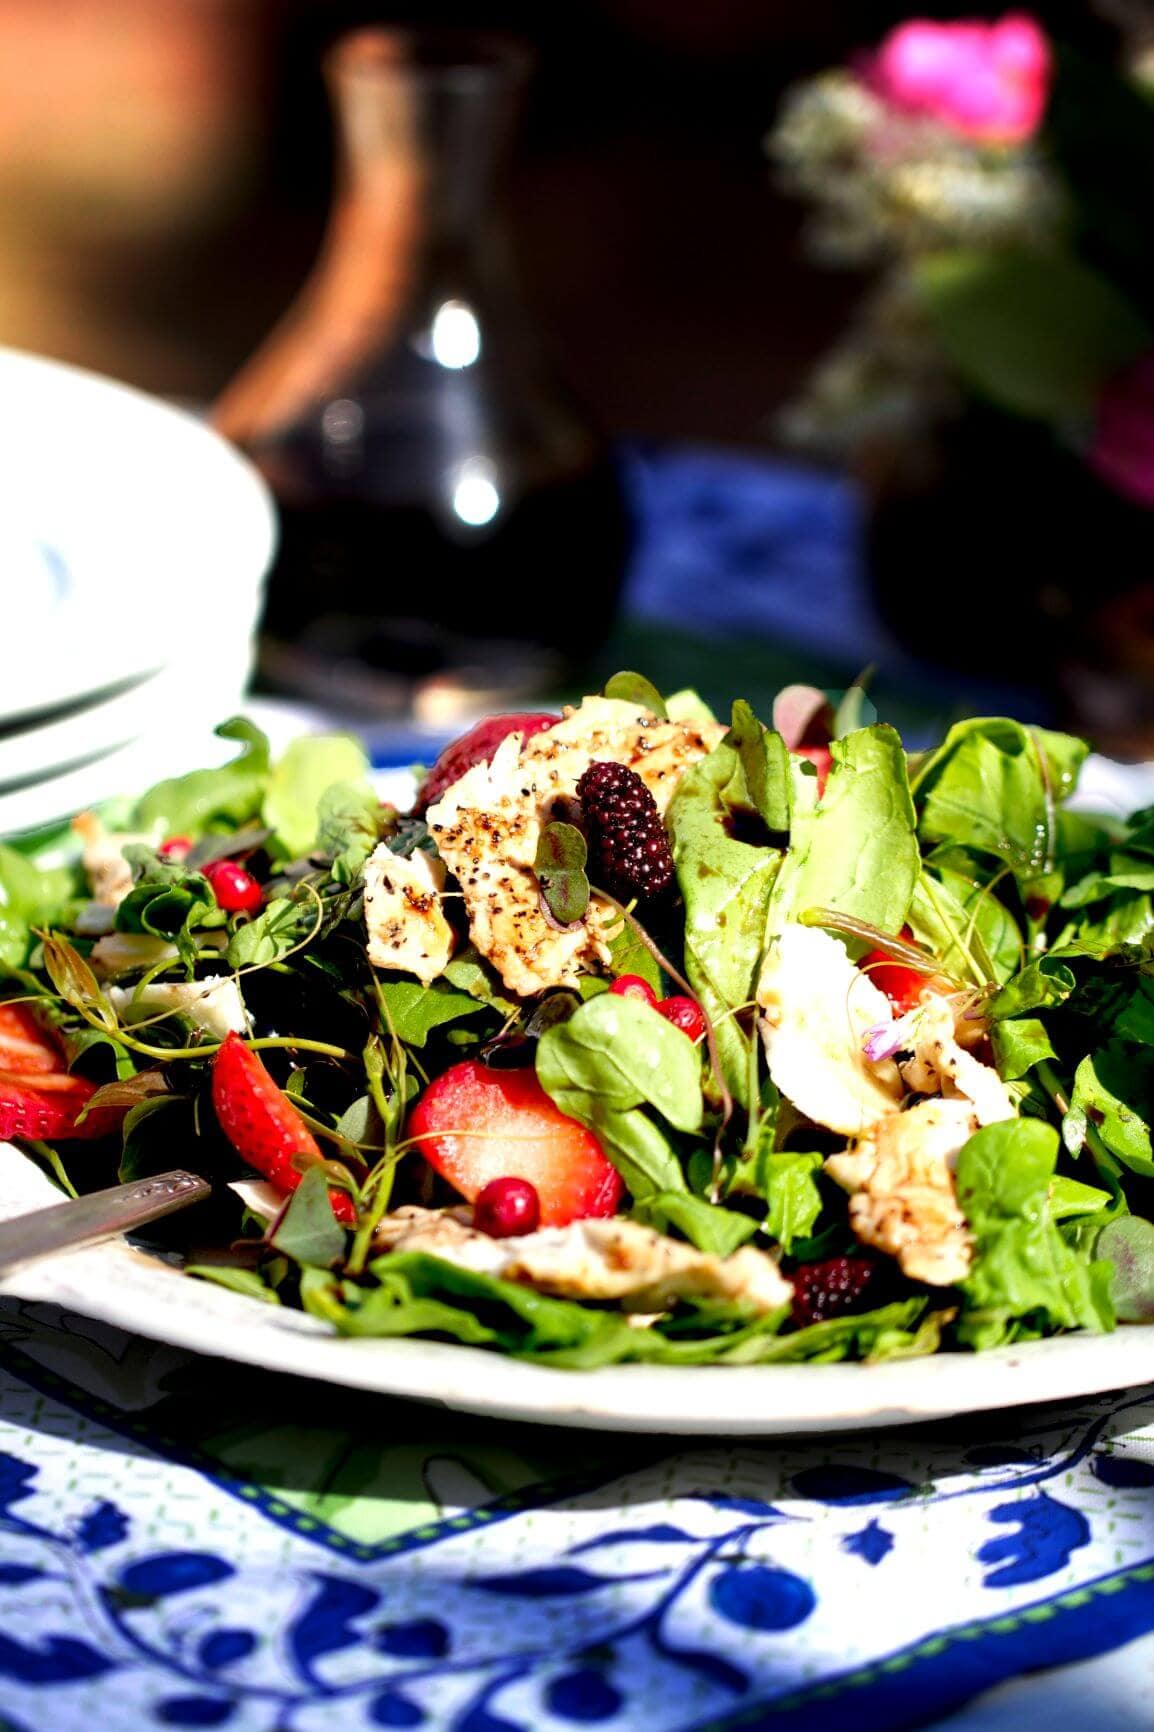 Dandelion Greens, Wood Sorrel, Greenbrier, and Wild Turkey Salad with balsamic vinaigrette recipe by Stacy Lyn Harris